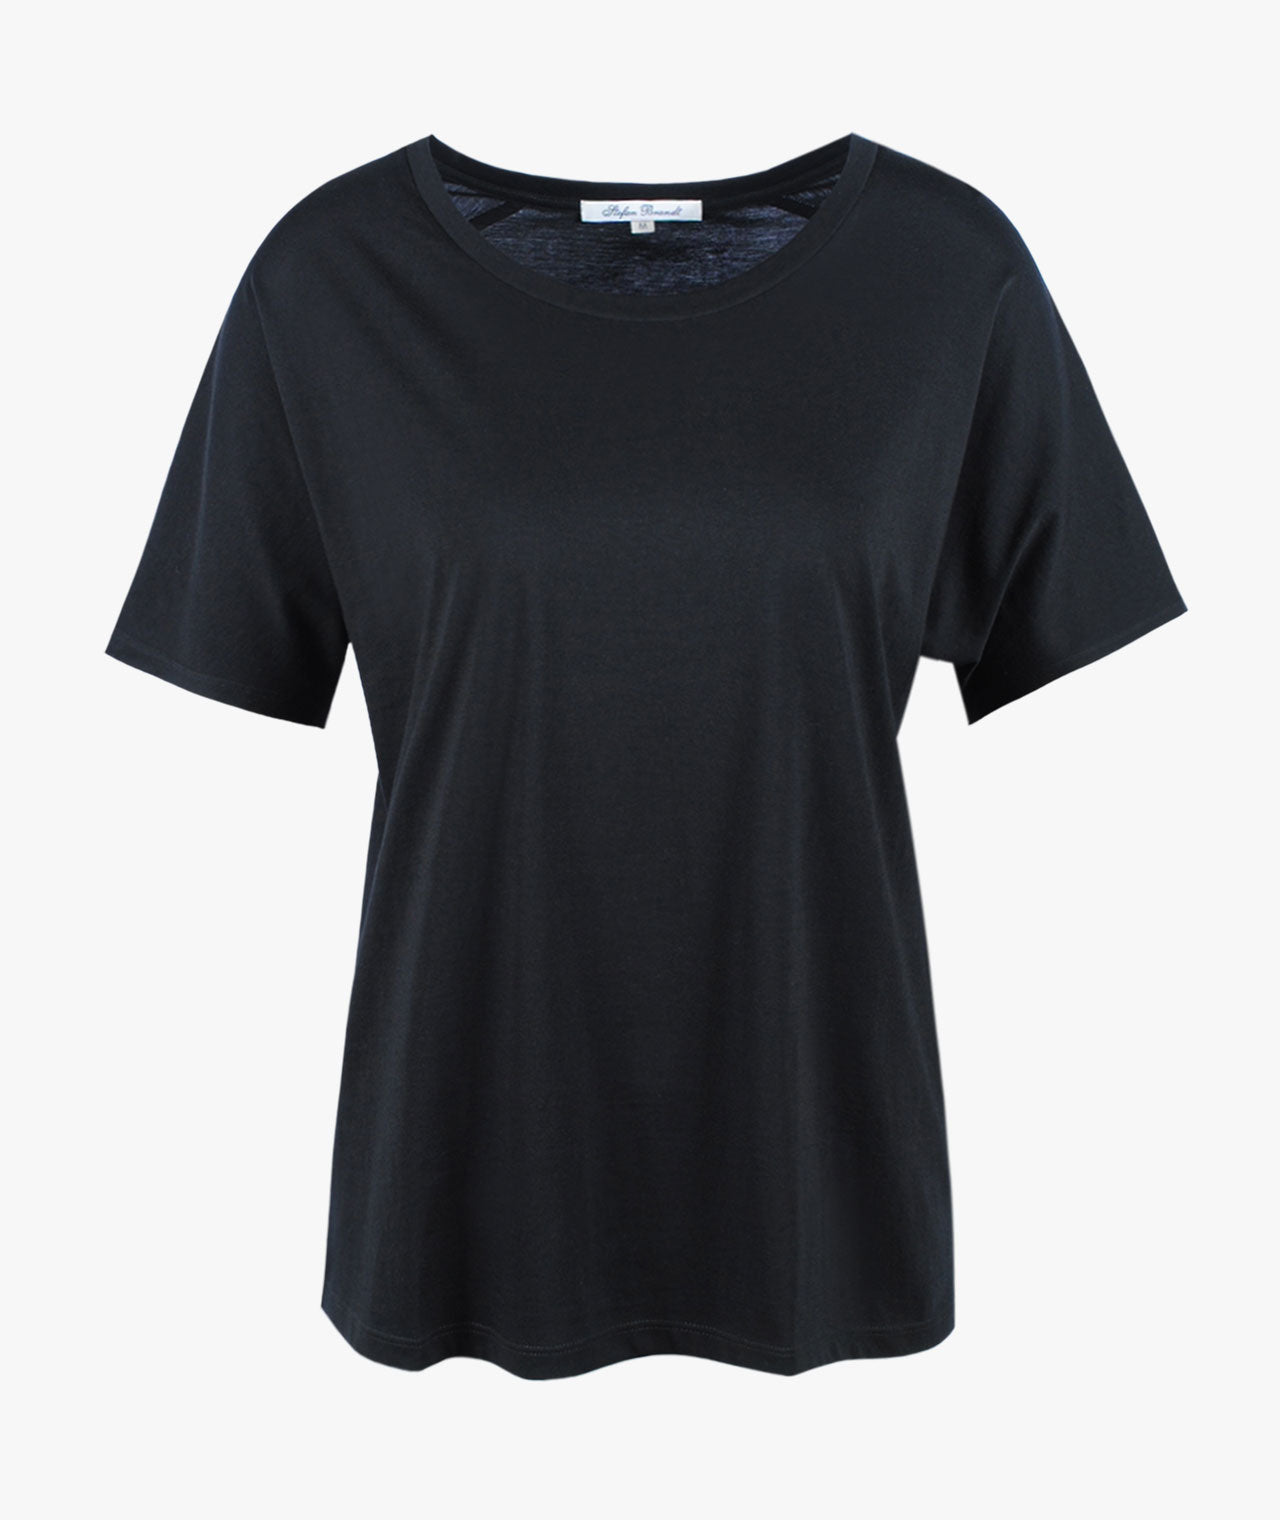 1/2 RH-Shirt Fabia | schwarz